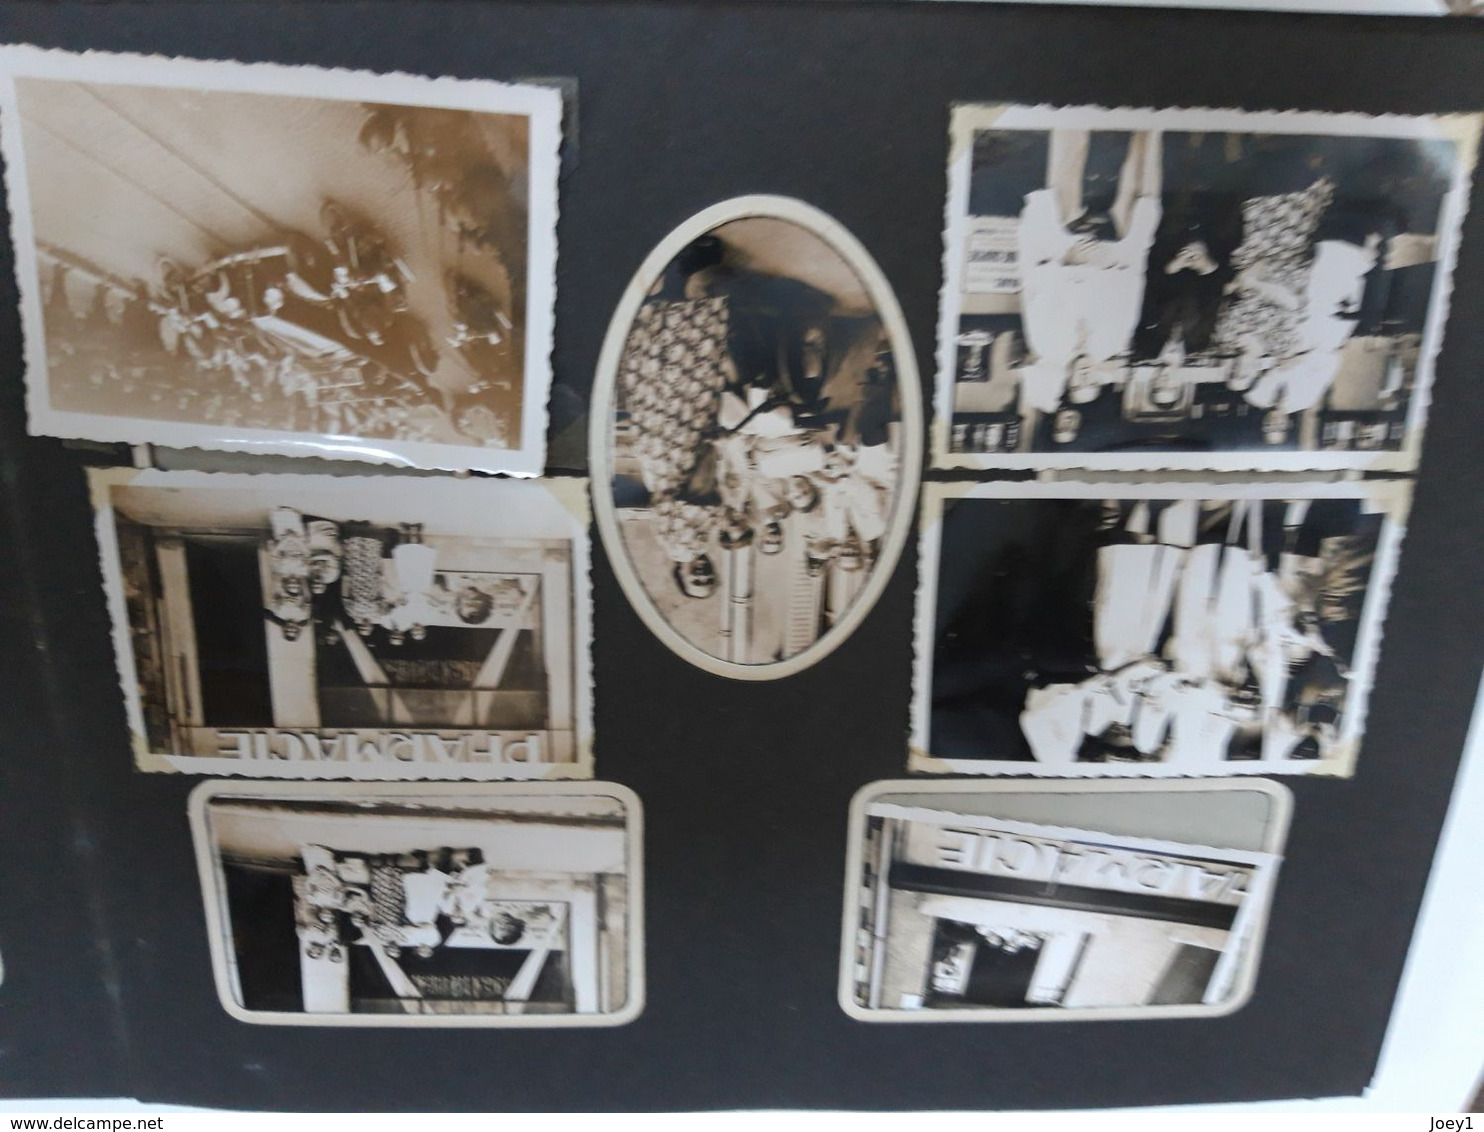 Album photos de familles de pharmaciens années 30..121 photos